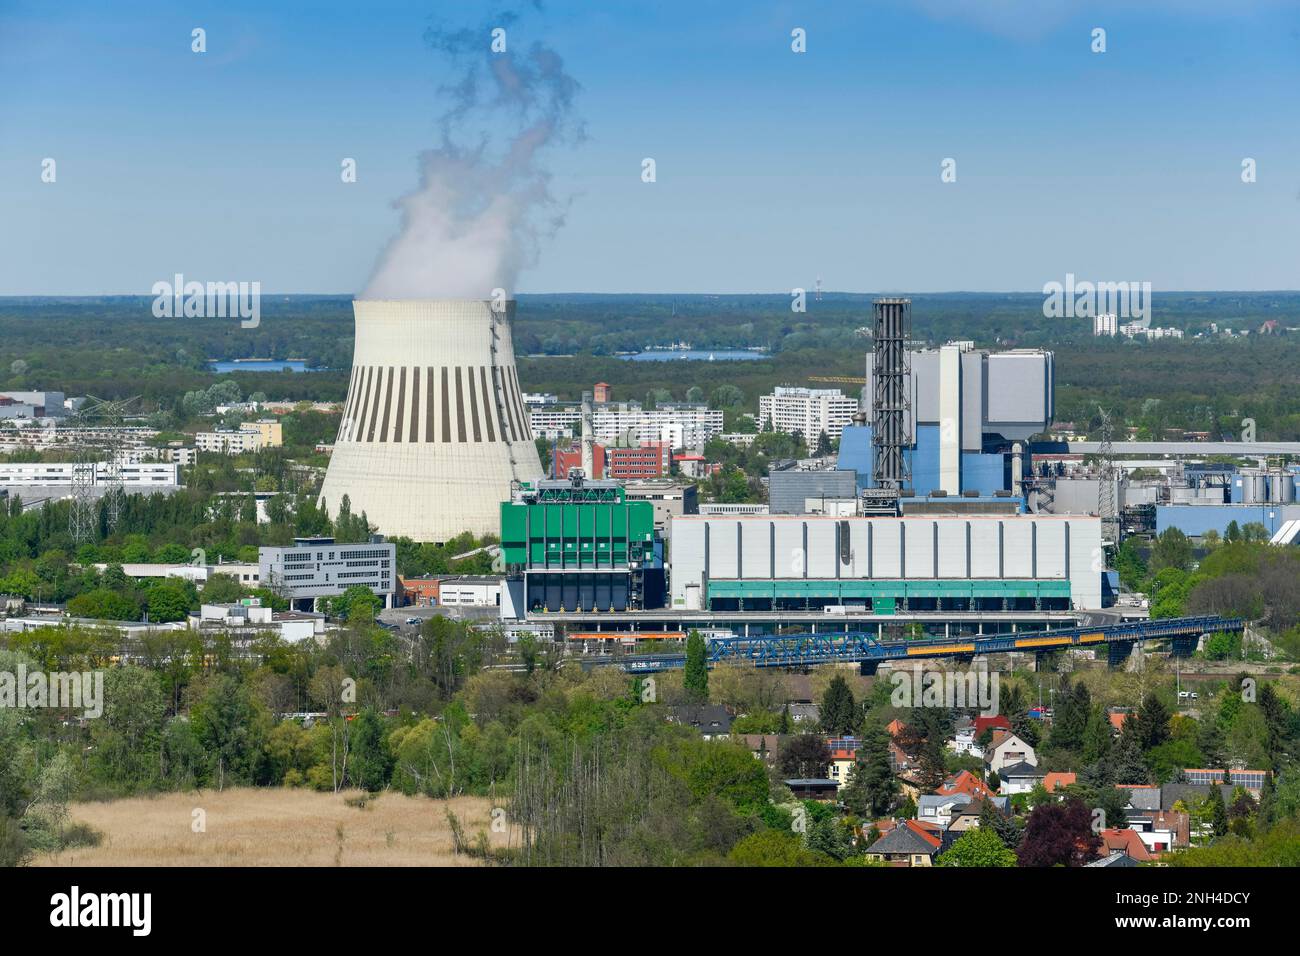 BSR impianto rifiuti-energia (anteriore), centrale elettrica Reuter West (posteriore), Ruhleben, Siemensstadt, Spandau, Berlino, Germania Foto Stock